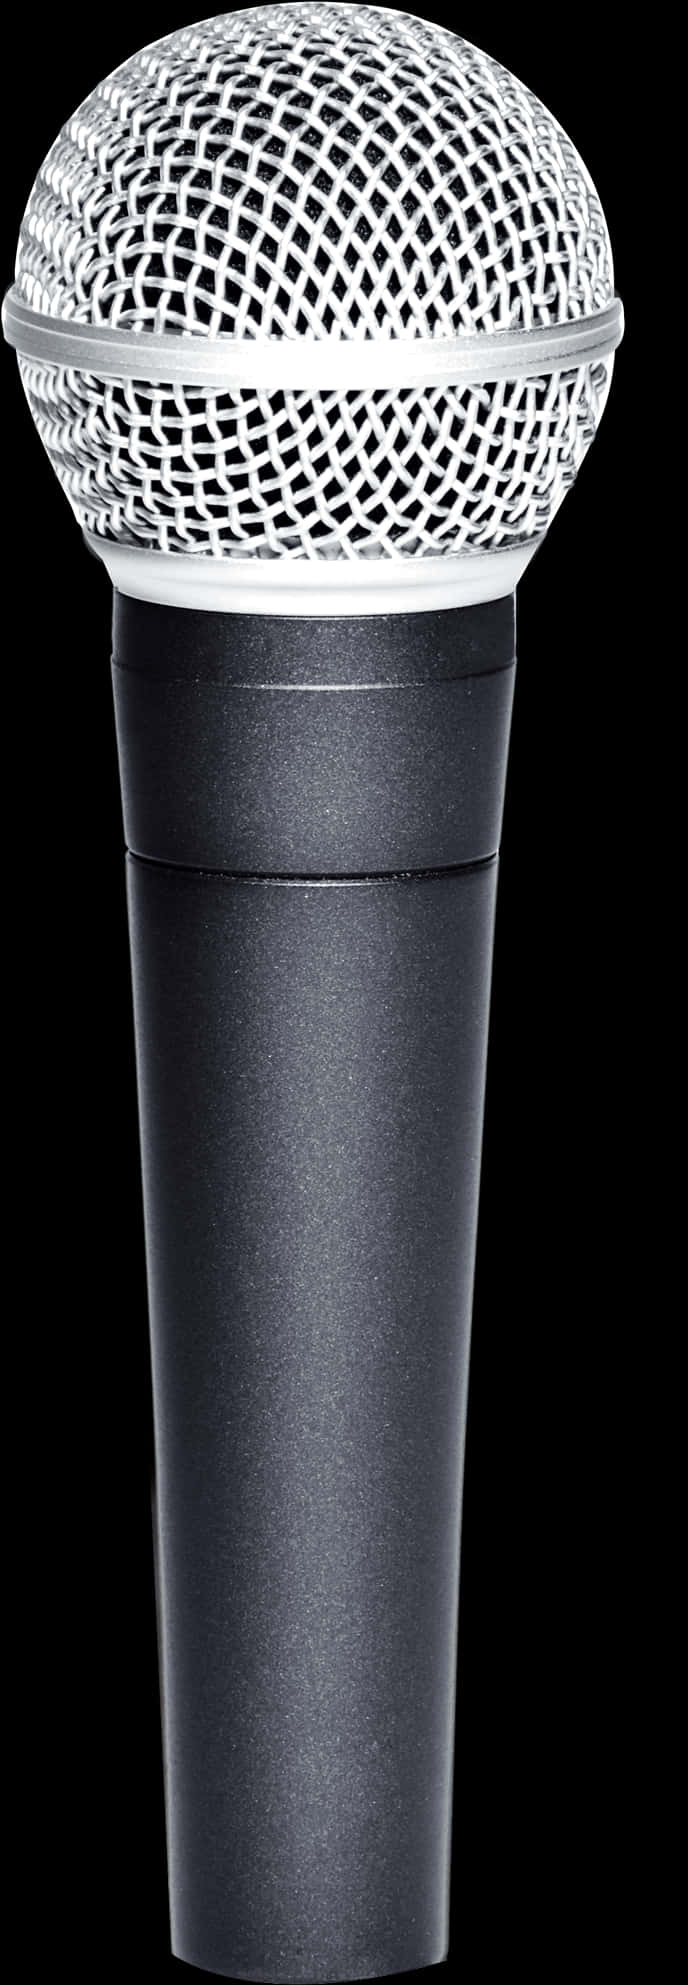 A Black Plastic Cup With A Black Cap